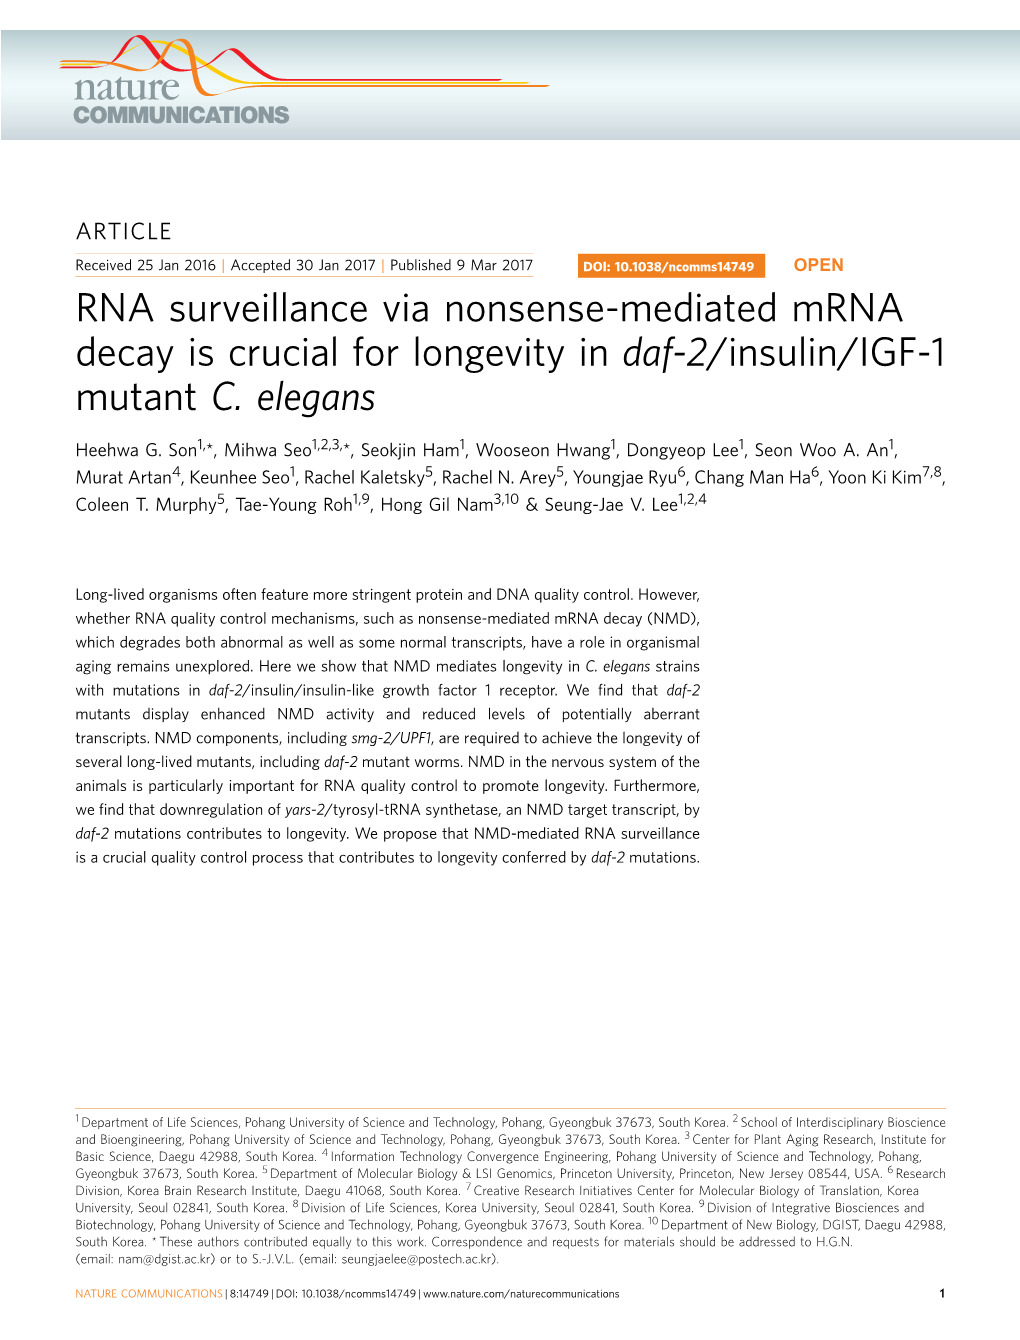 RNA Surveillance Via Nonsense-Mediated Mrna Decay Is Crucial for Longevity in Daf-2/Insulin/IGF-1 Mutant C. Elegans